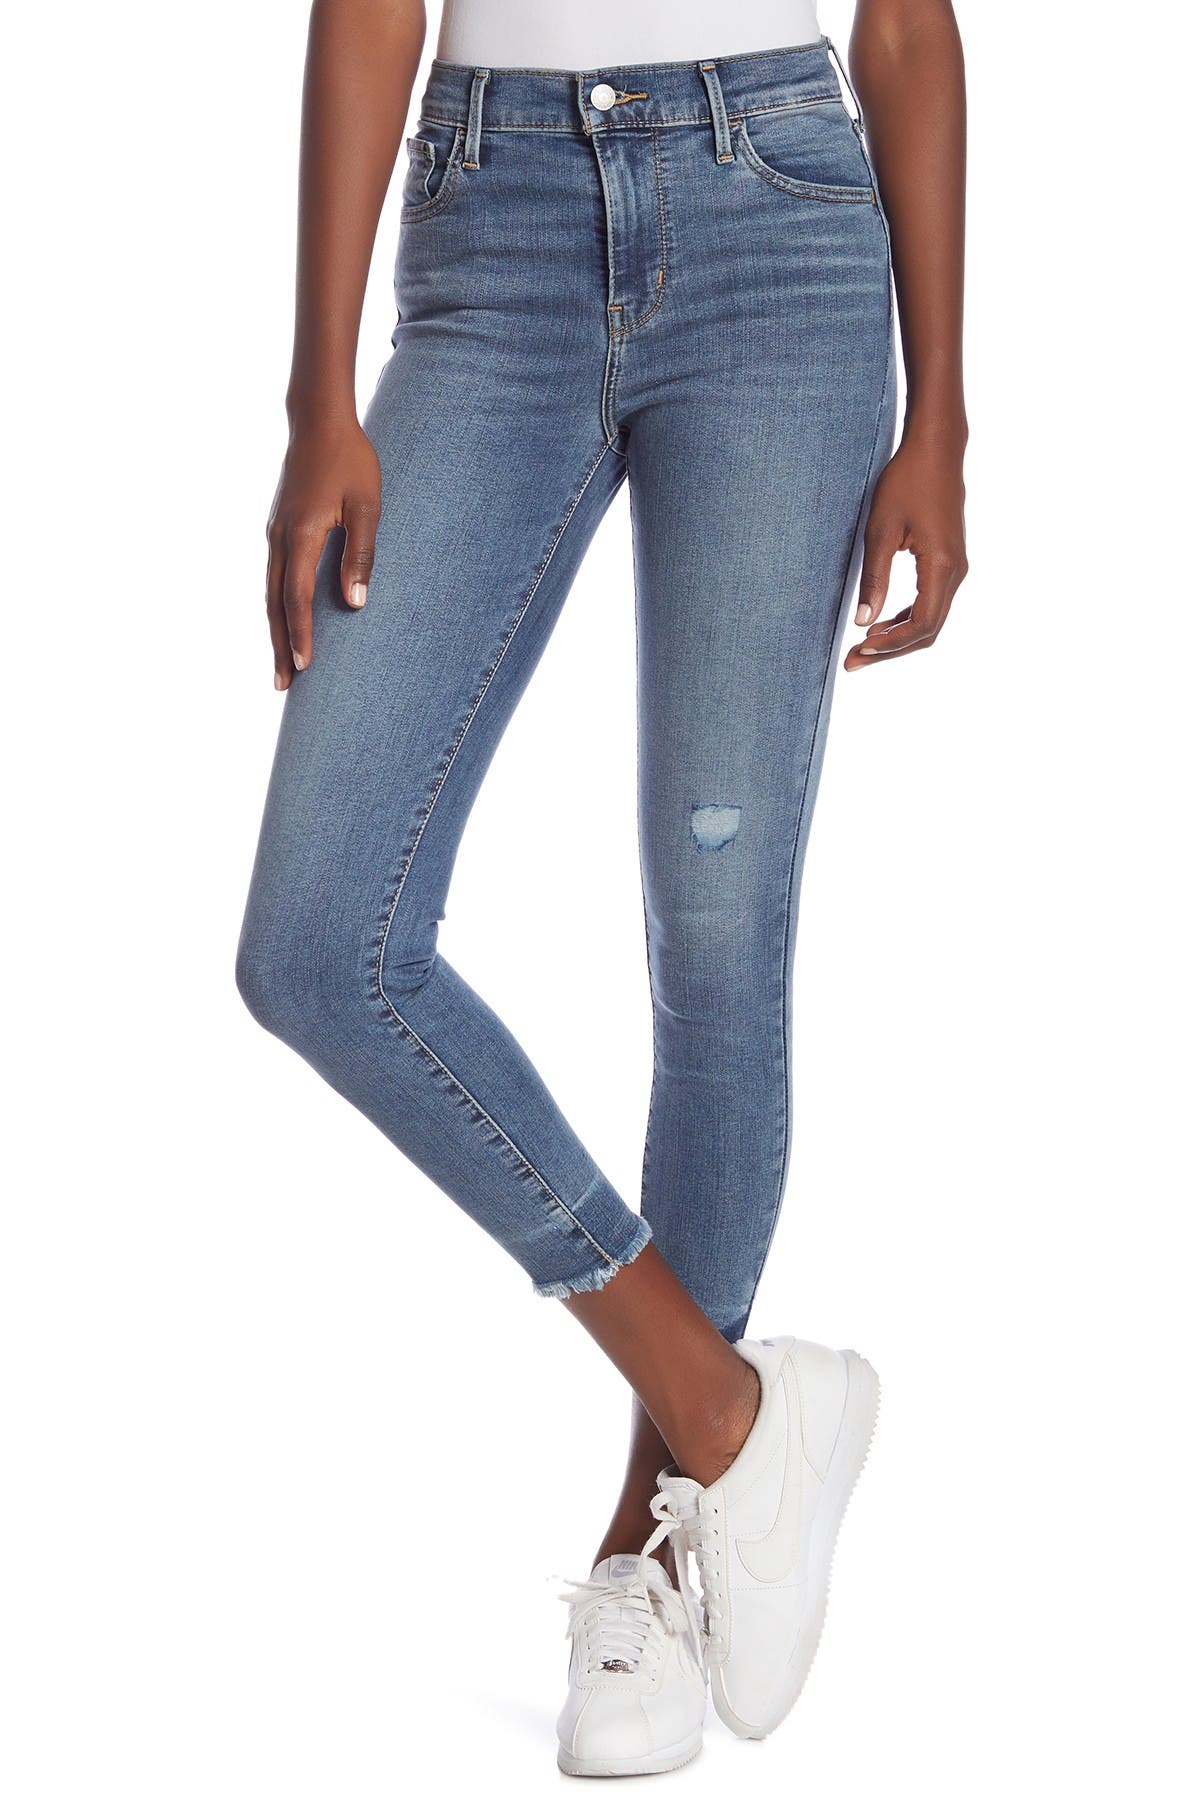 levi's women's 720 high rise super skinny jeans